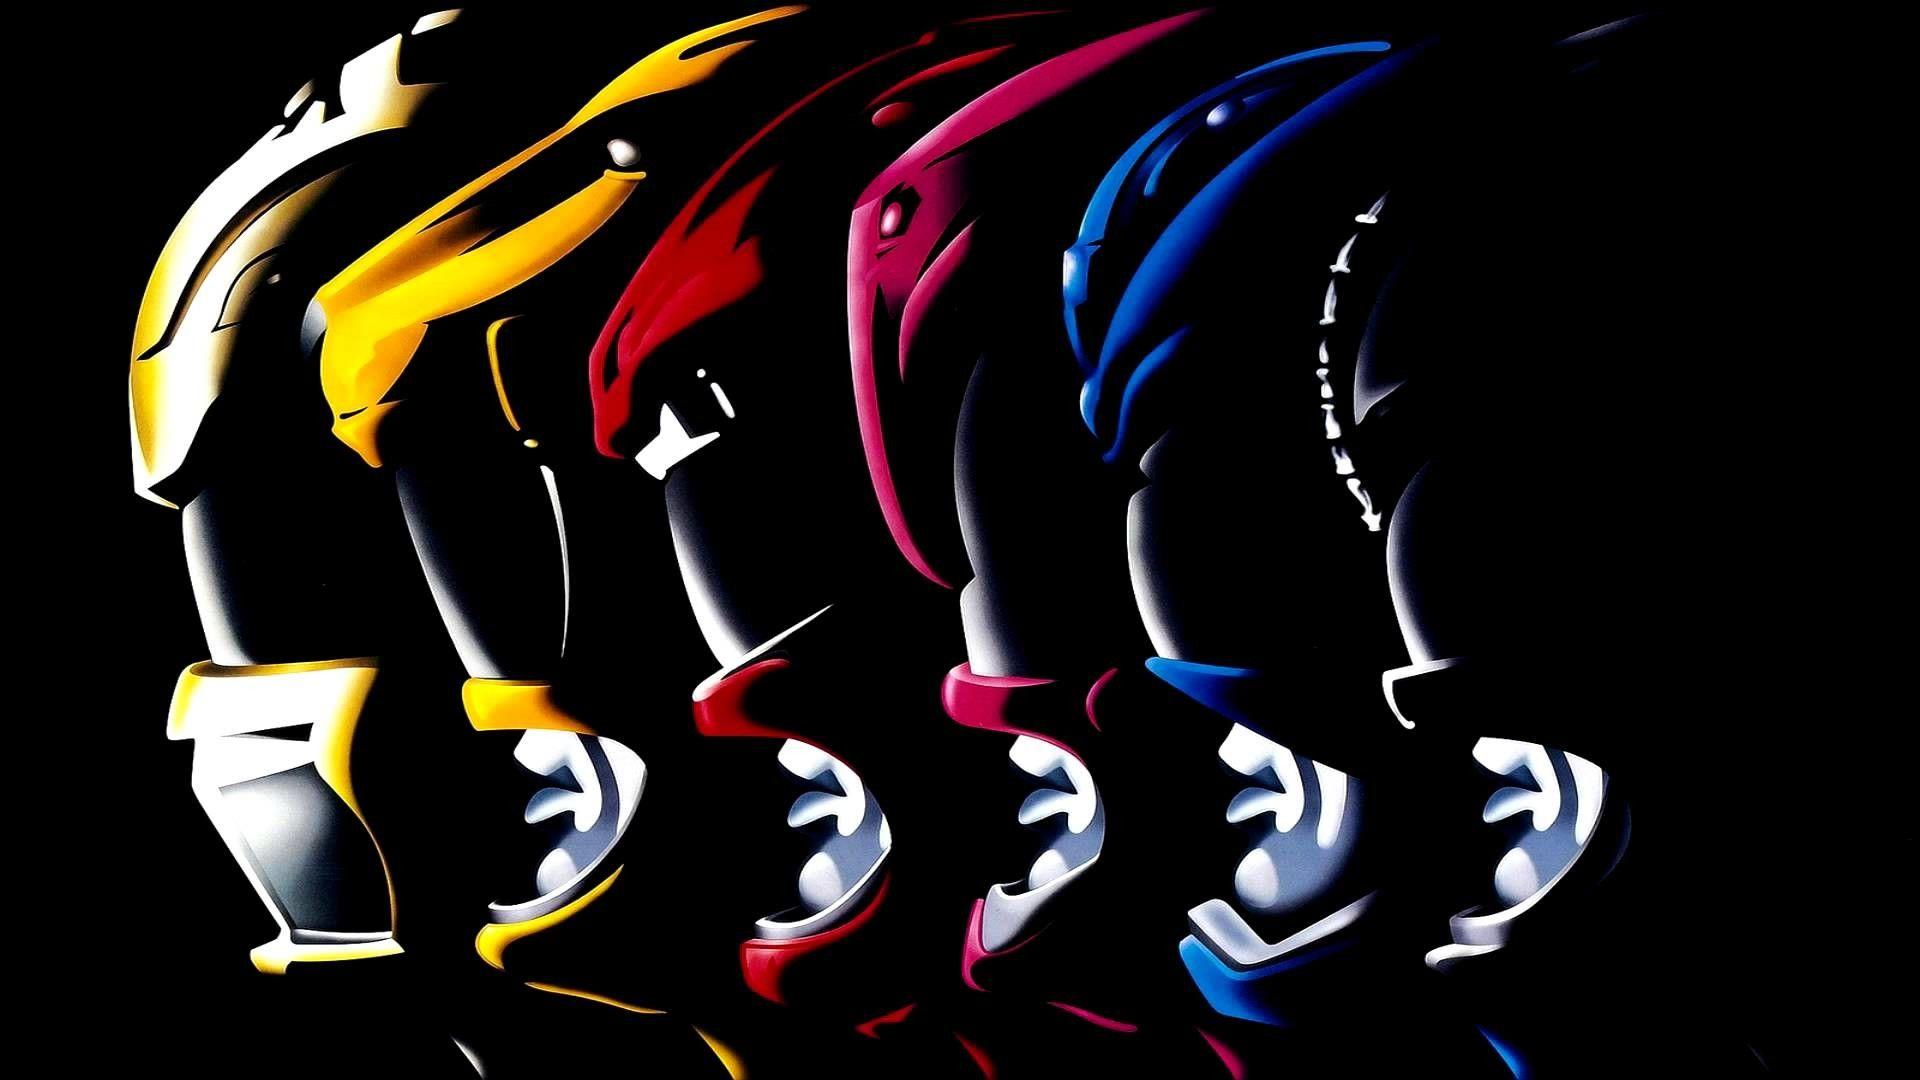 Power Rangers Wallpaper for iPhone